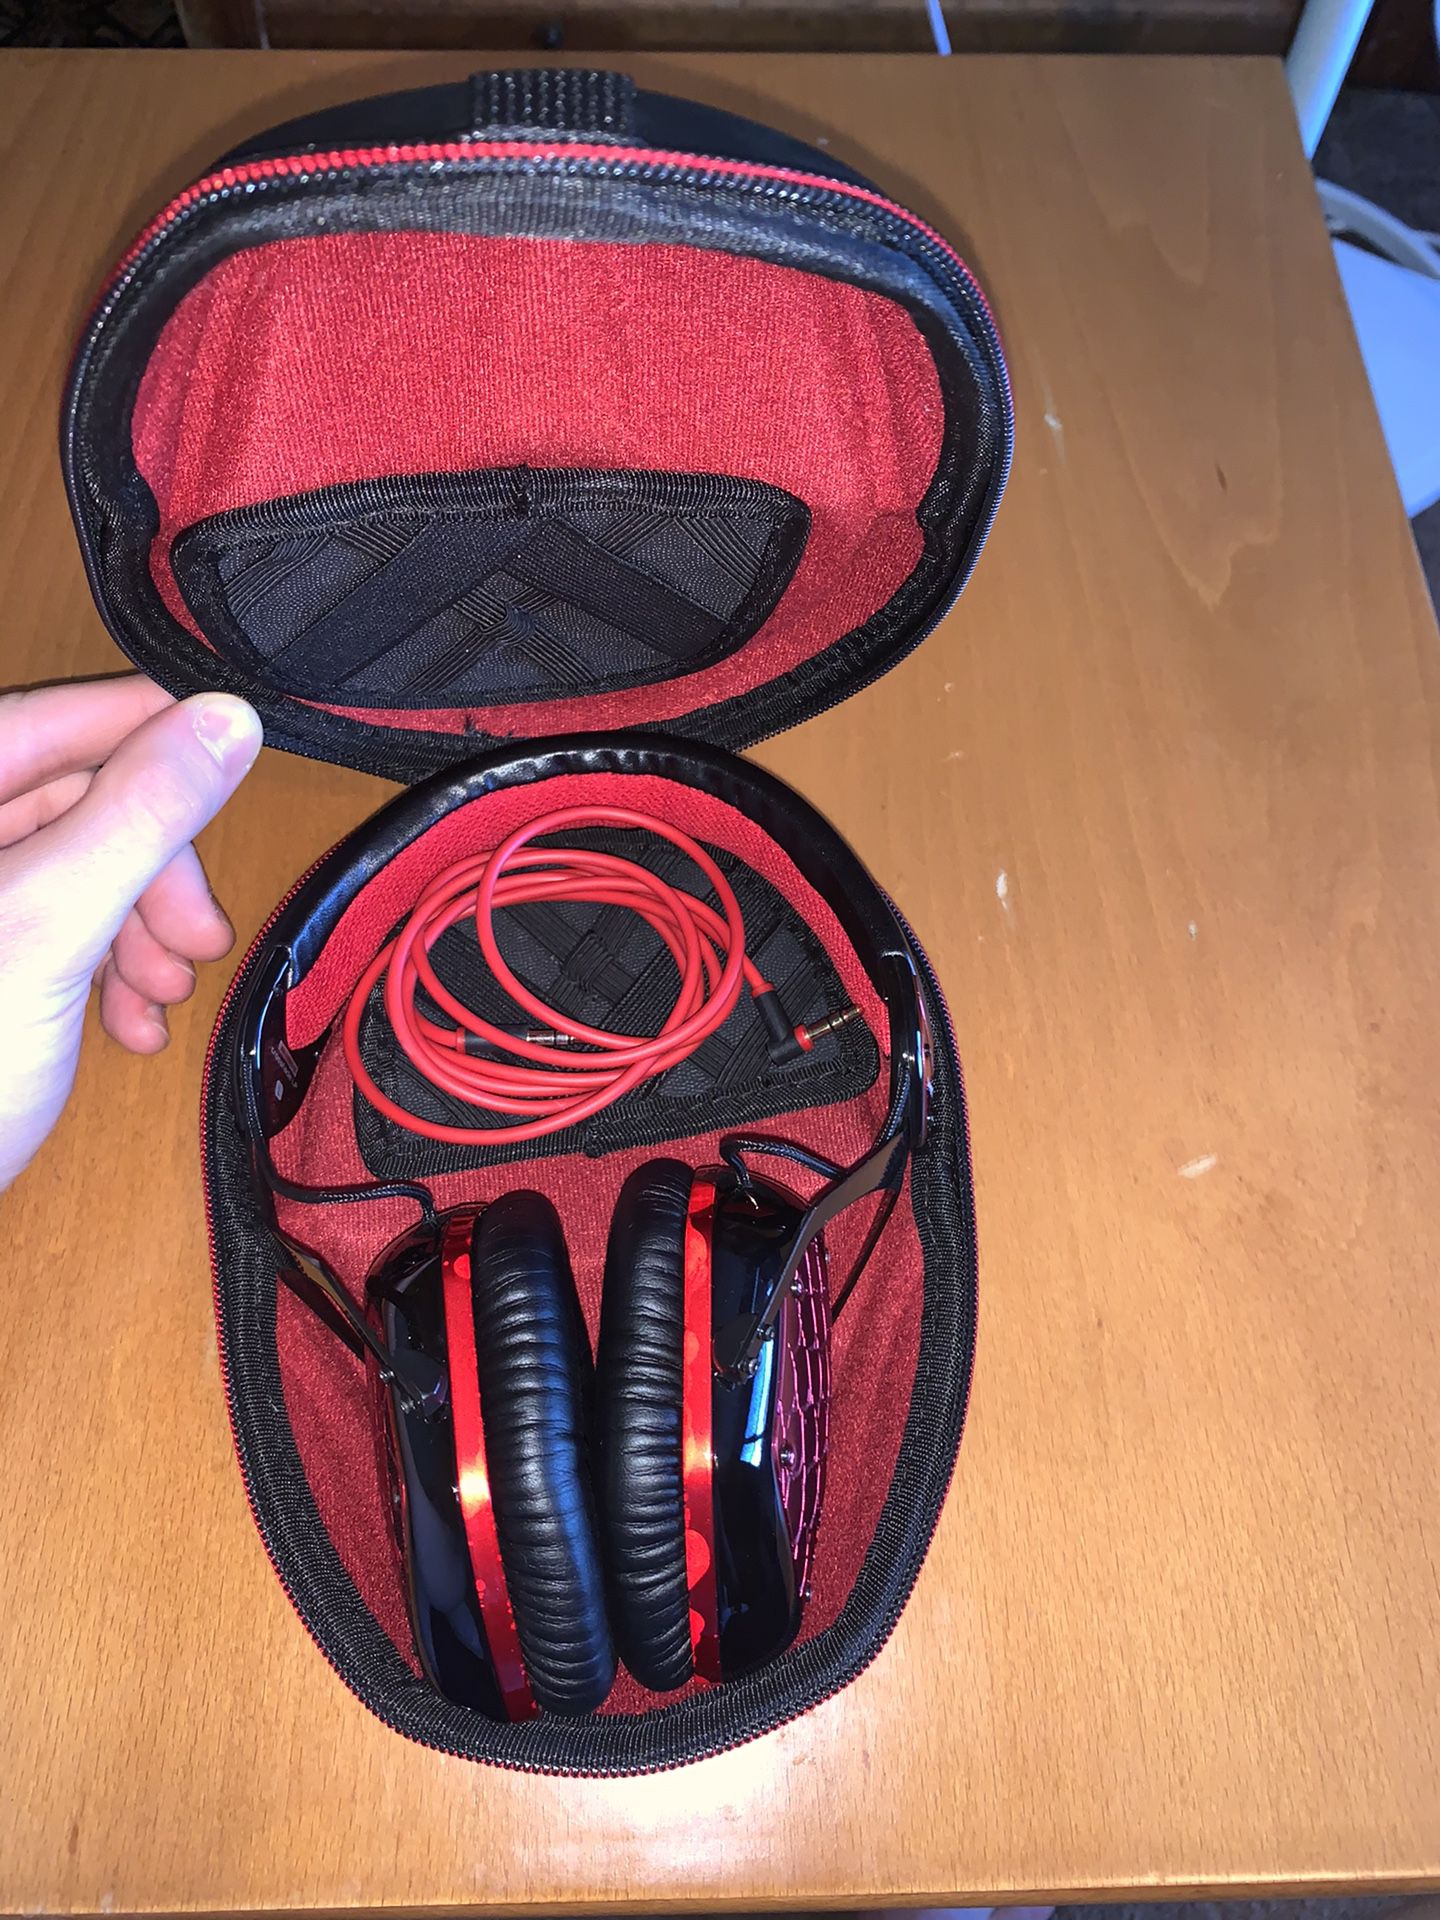 New Headphones (V Moda brand) with case